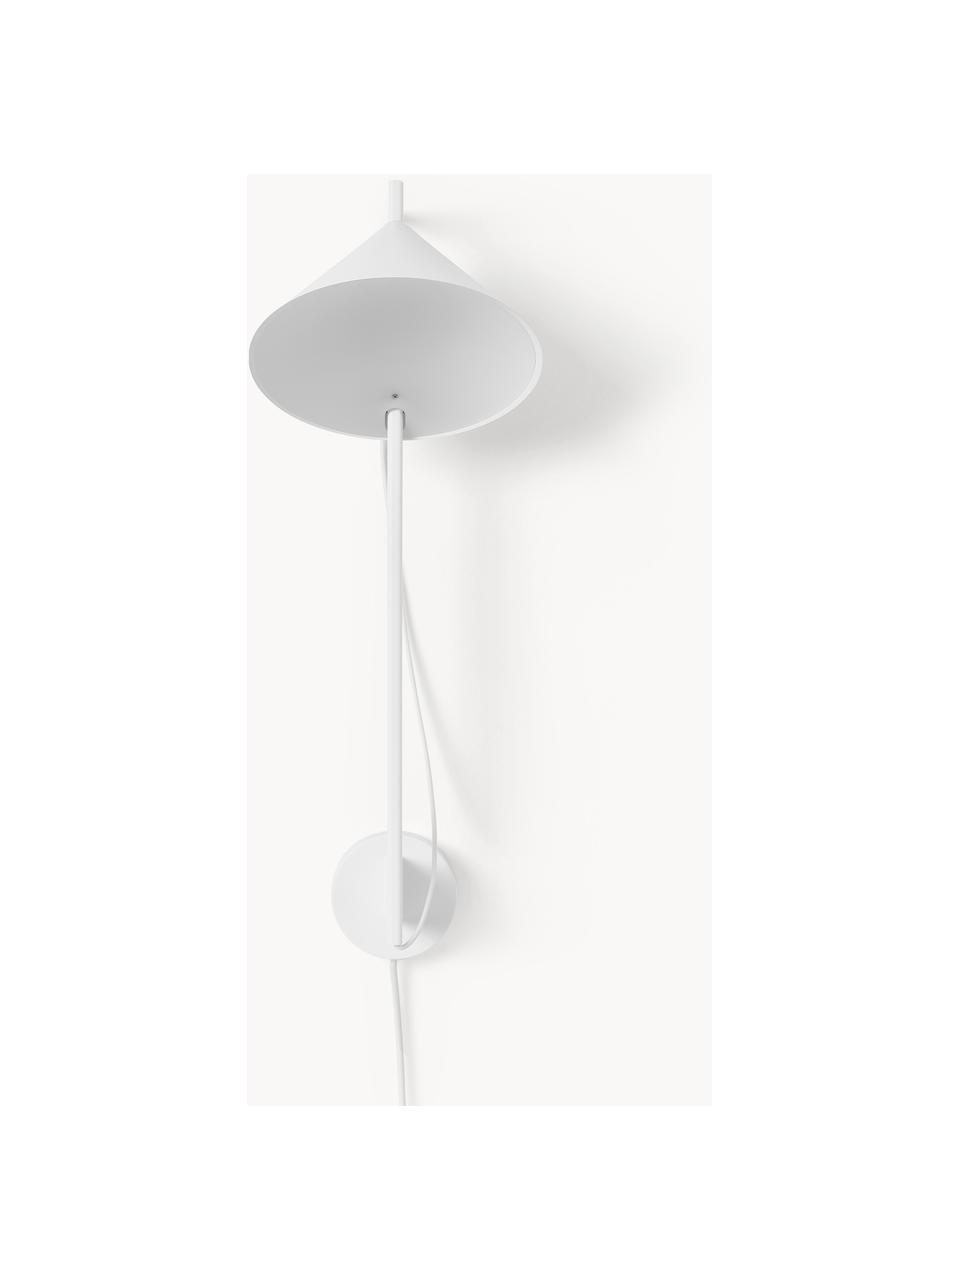 Dimmbare LED-Wandleuchte Yuh mit Timerfunktion, Lampenschirm: Aluminium, lackiert, Weiß, B 30 x H 63 cm